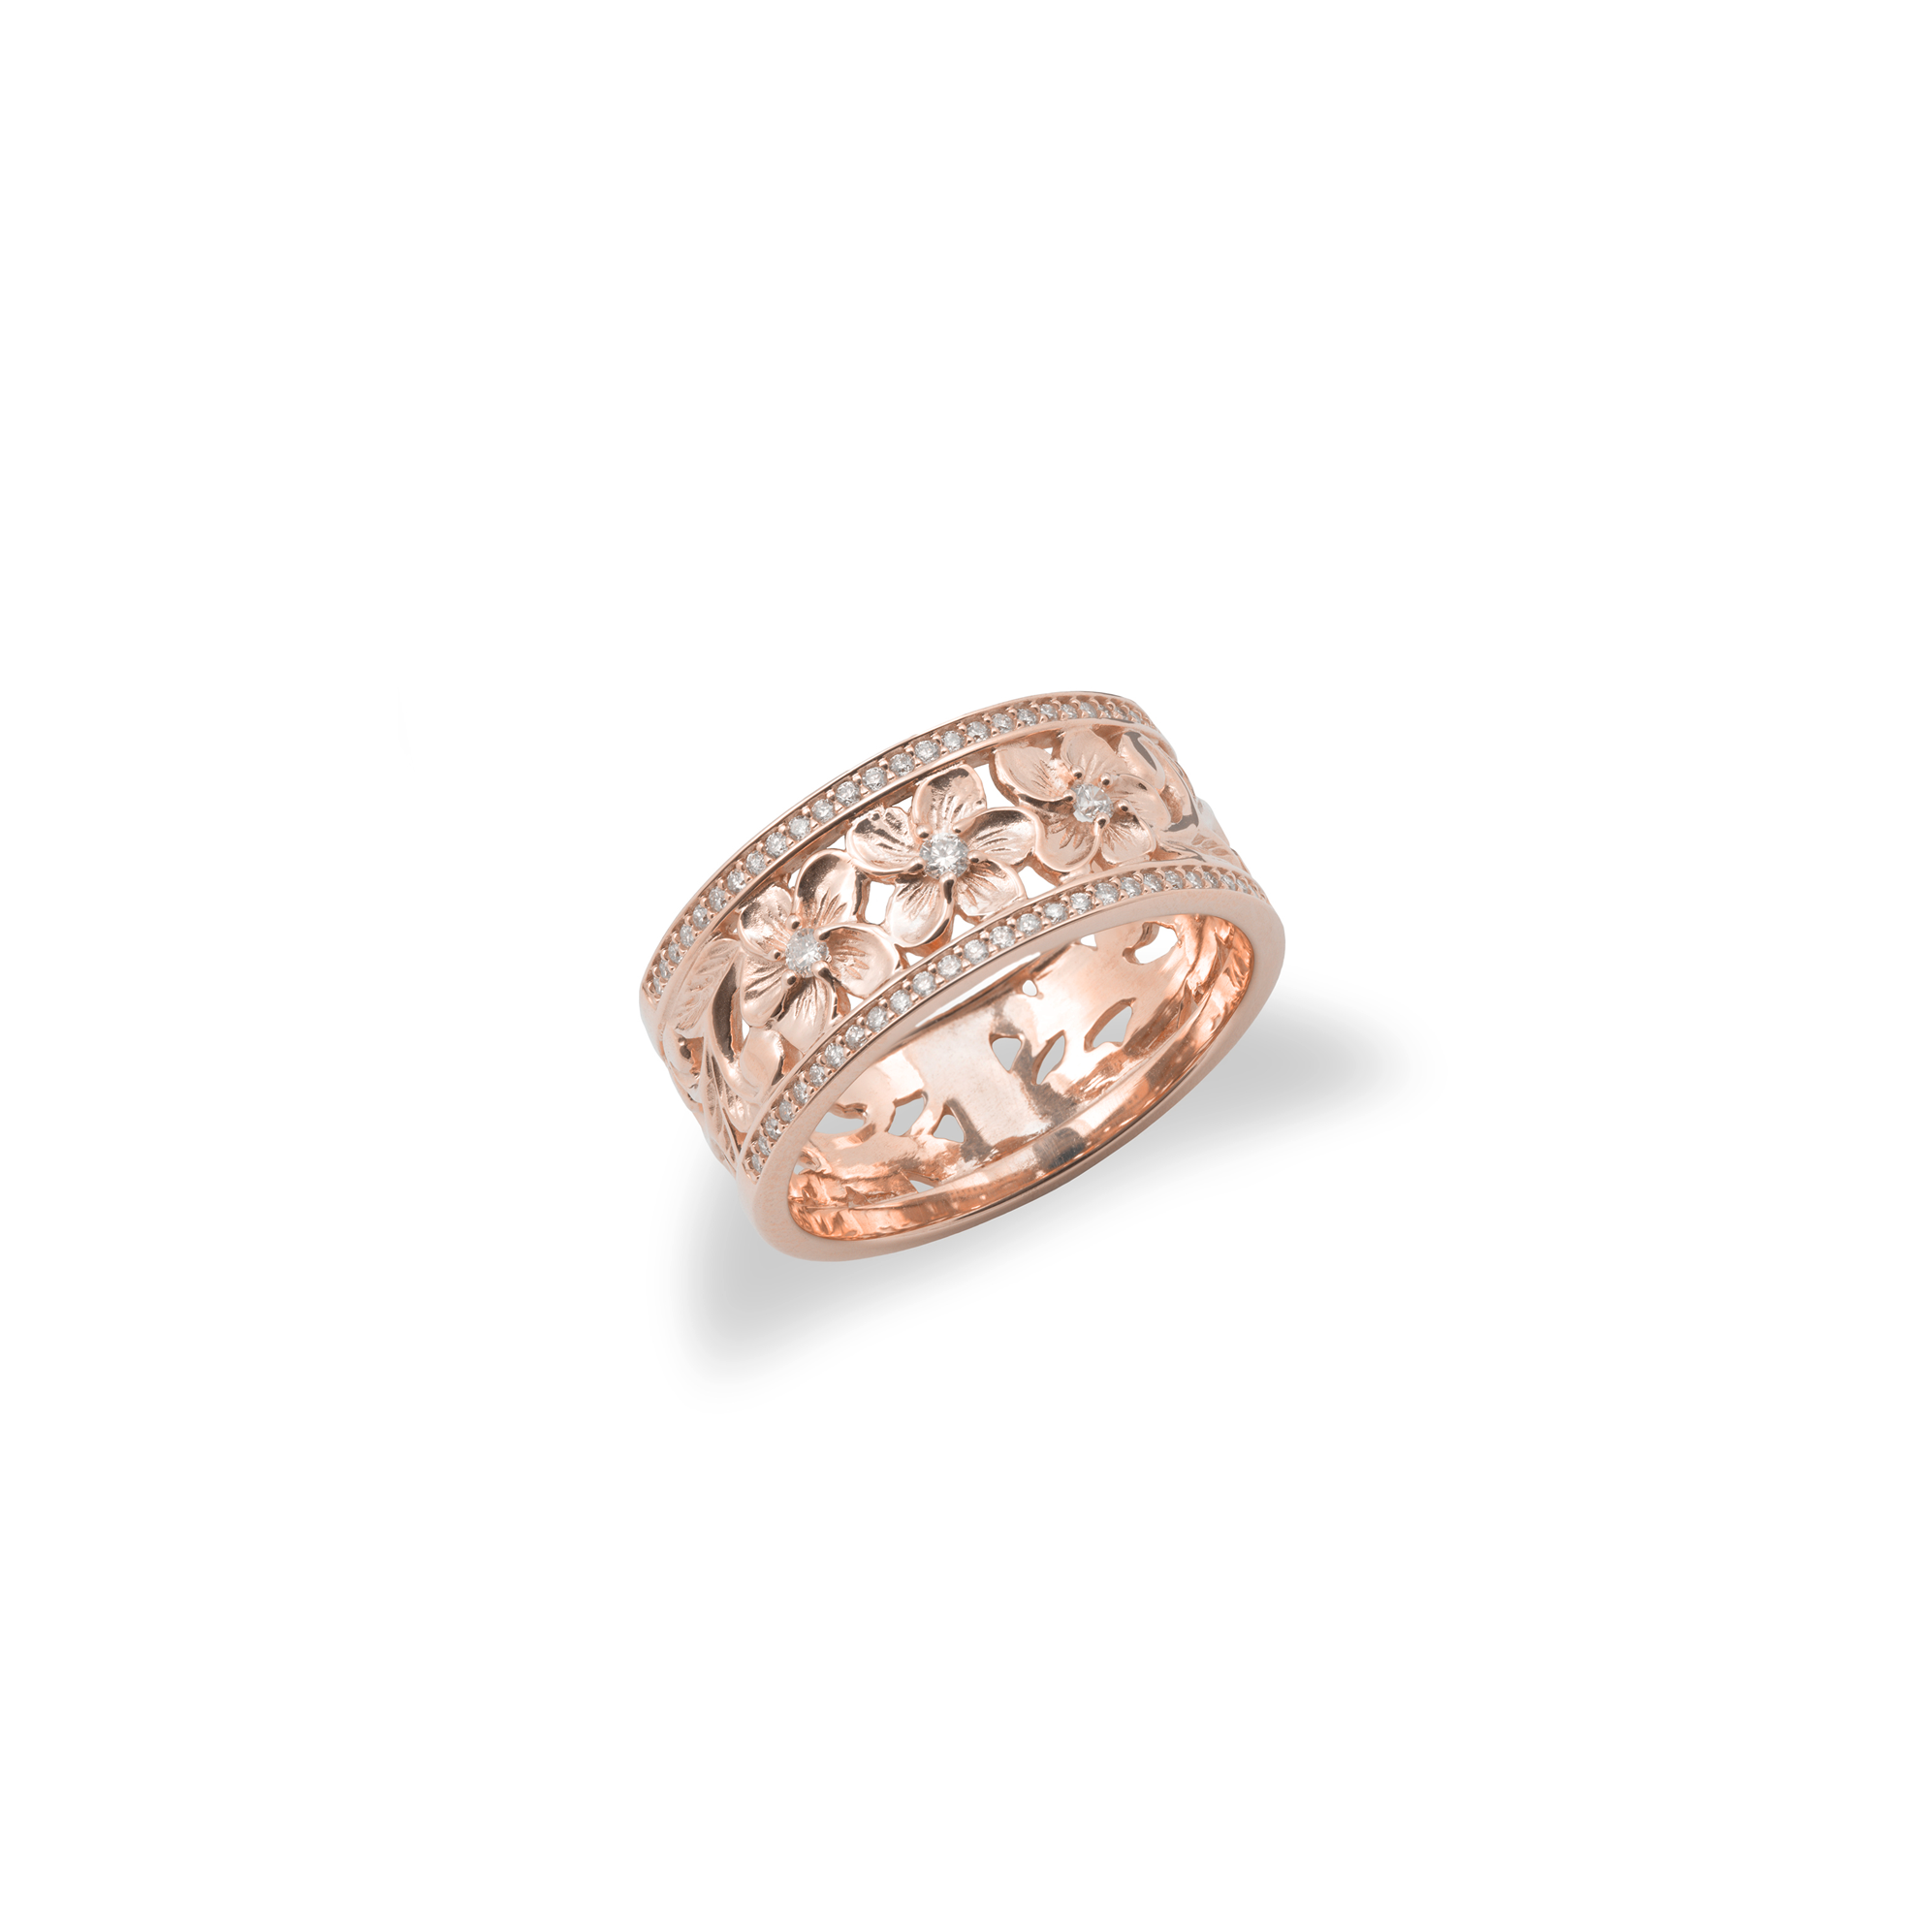 Hawaiian Heirloom Plumeria Ring in Rose Gold with Diamonds - 10mm